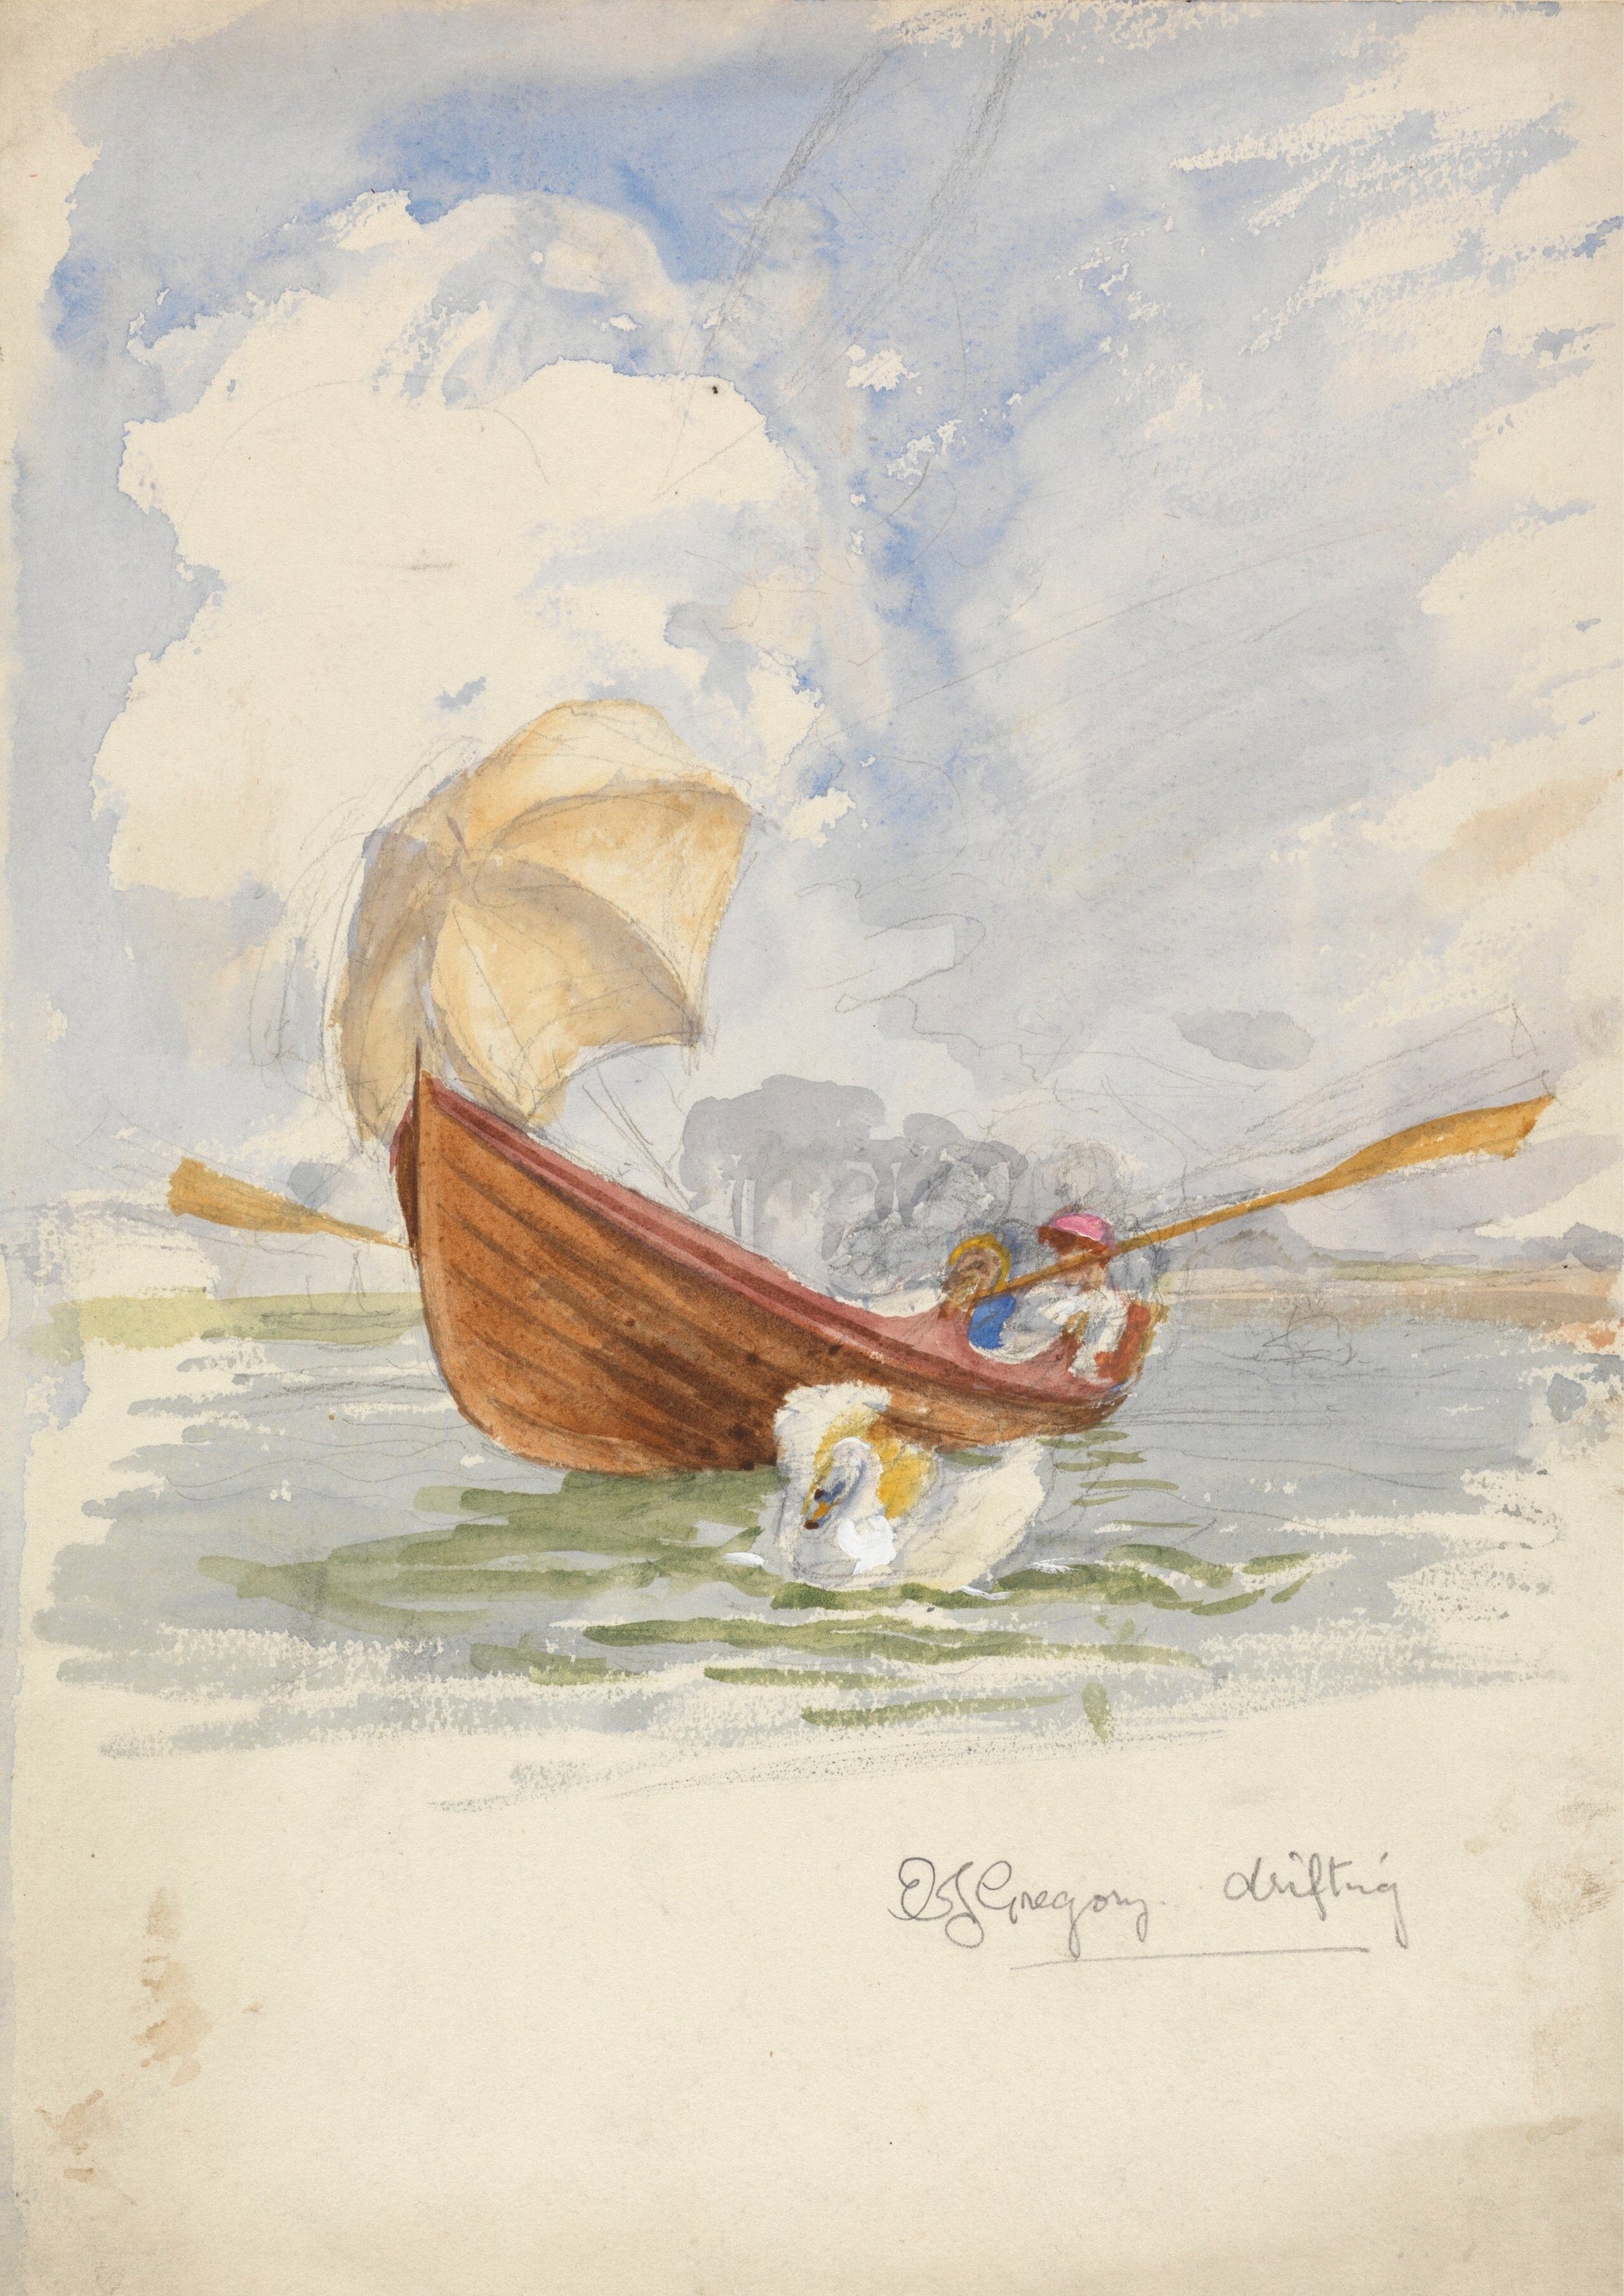 Boat Drifting (1800s) | Edward John Gregory artwork Posters, Prints, & Visual Artwork The Trumpet Shop   